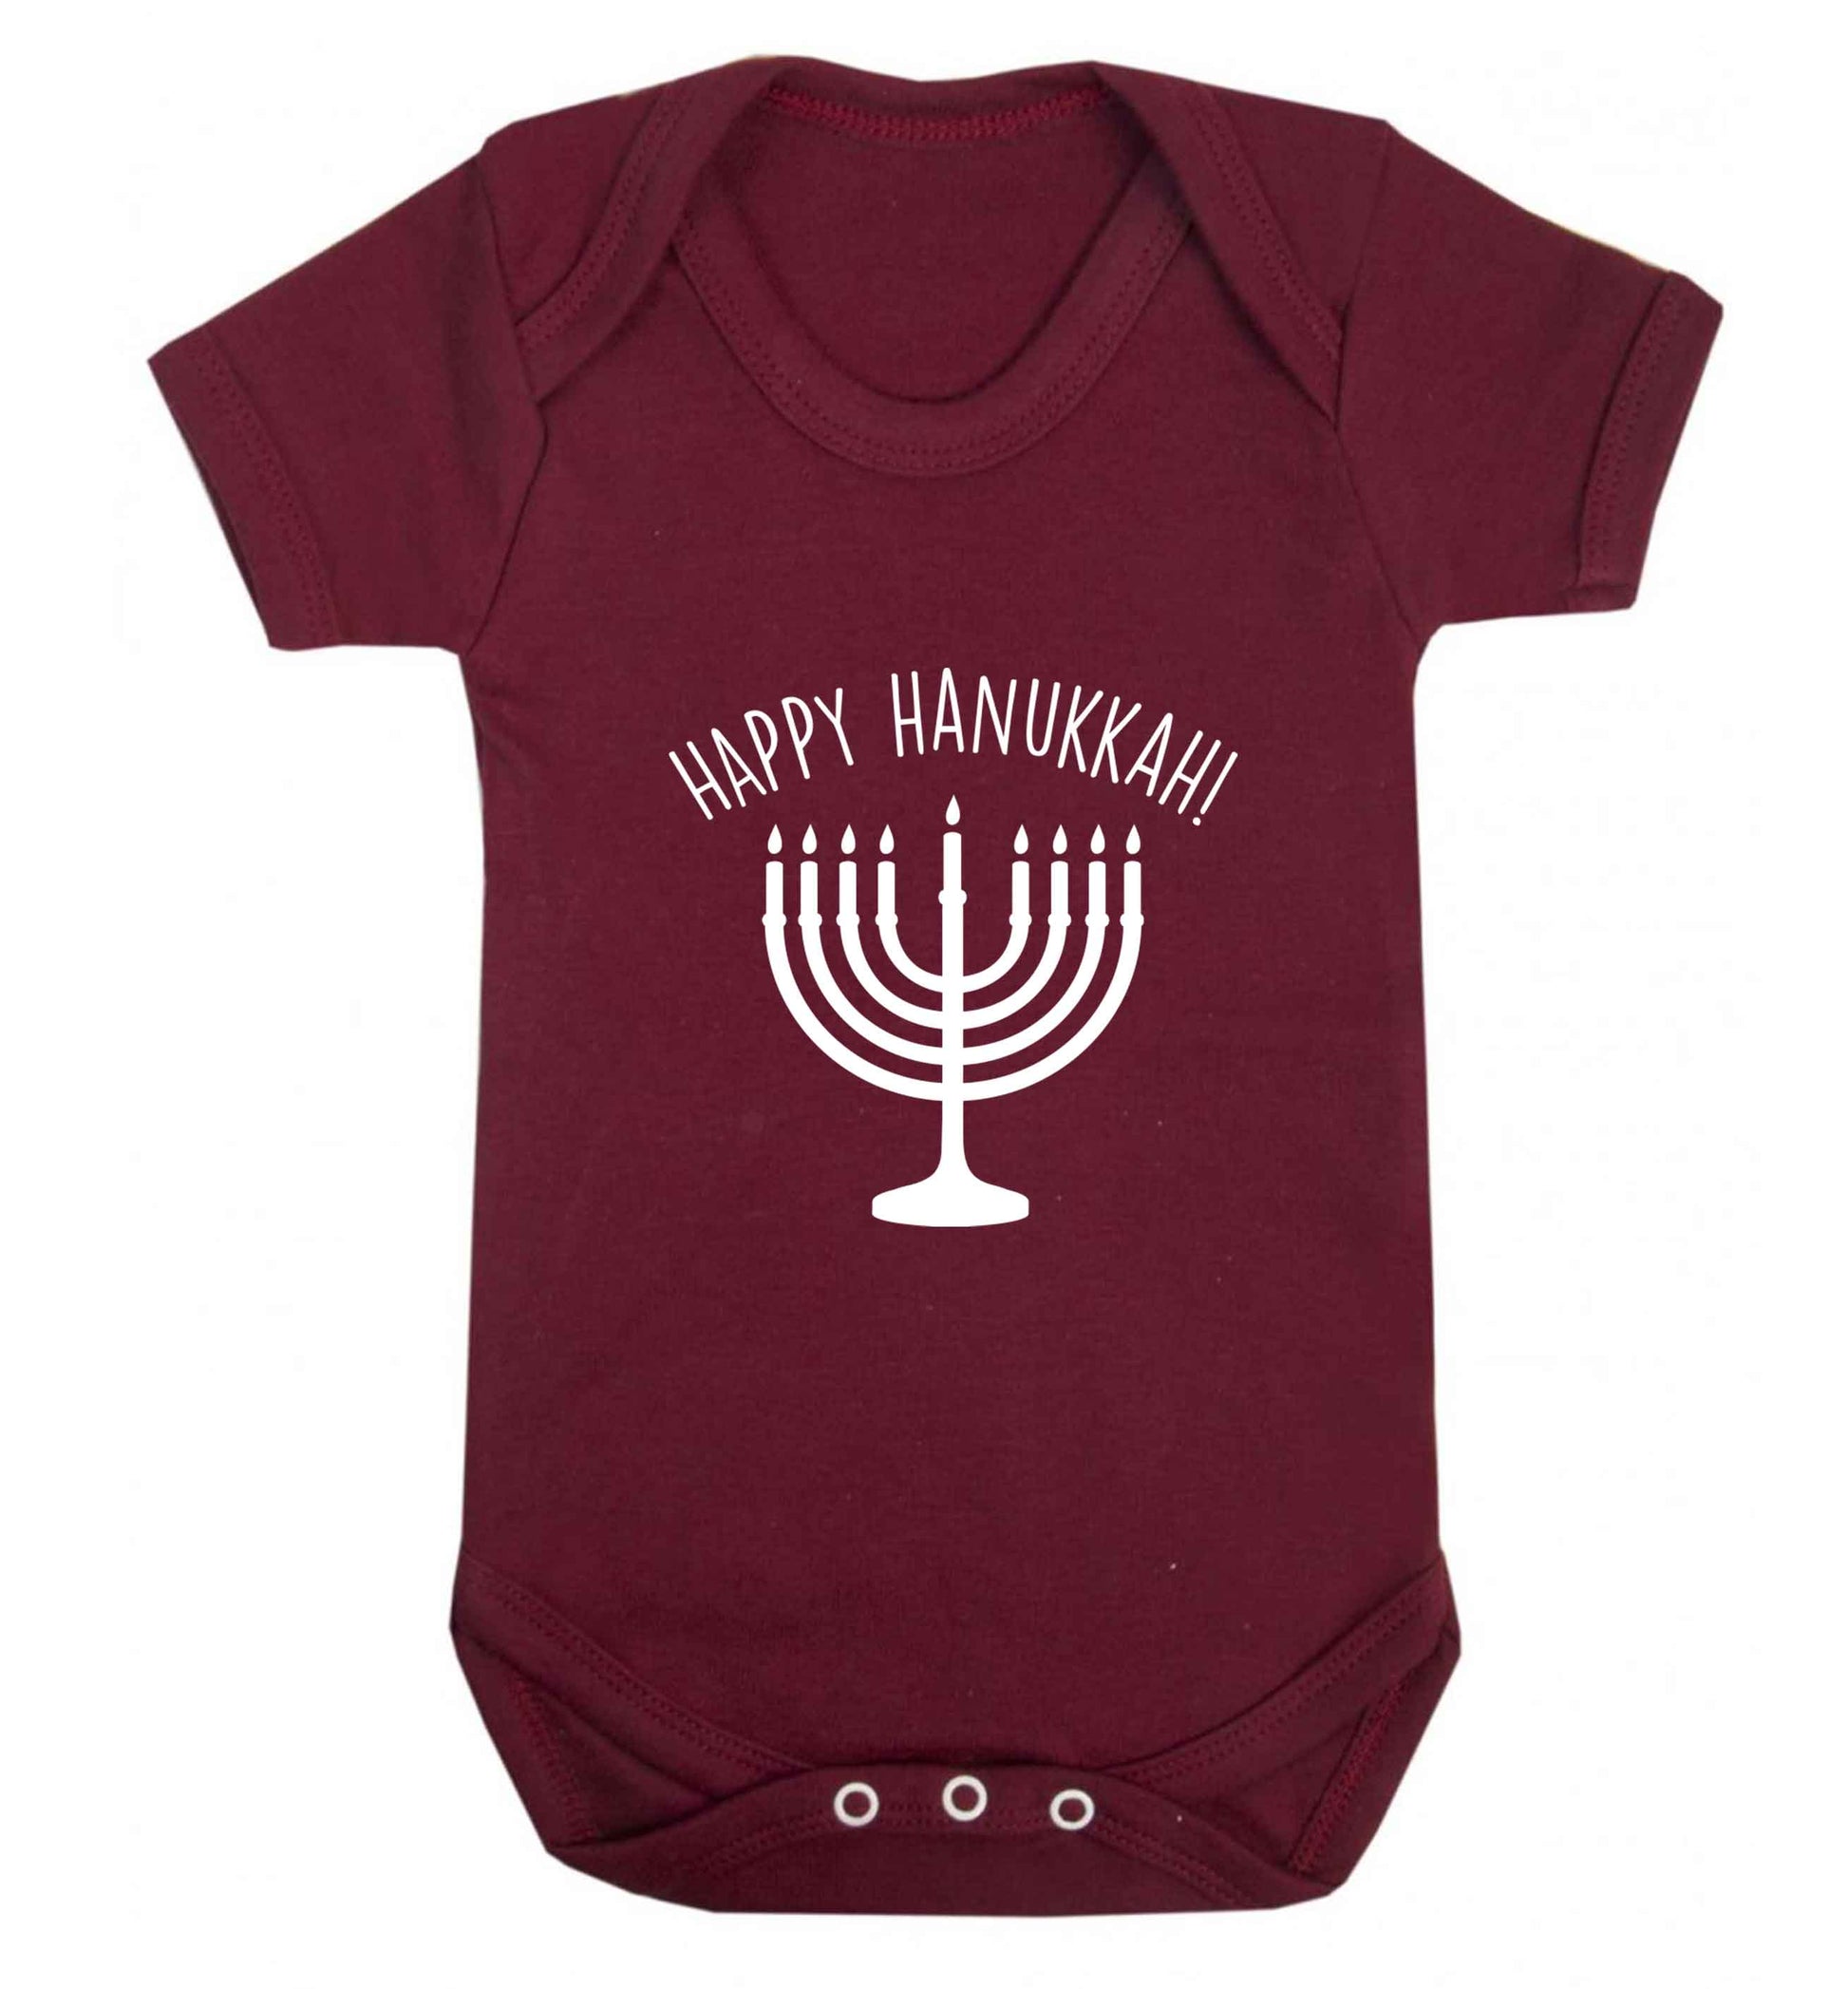 Happy hanukkah baby vest maroon 18-24 months